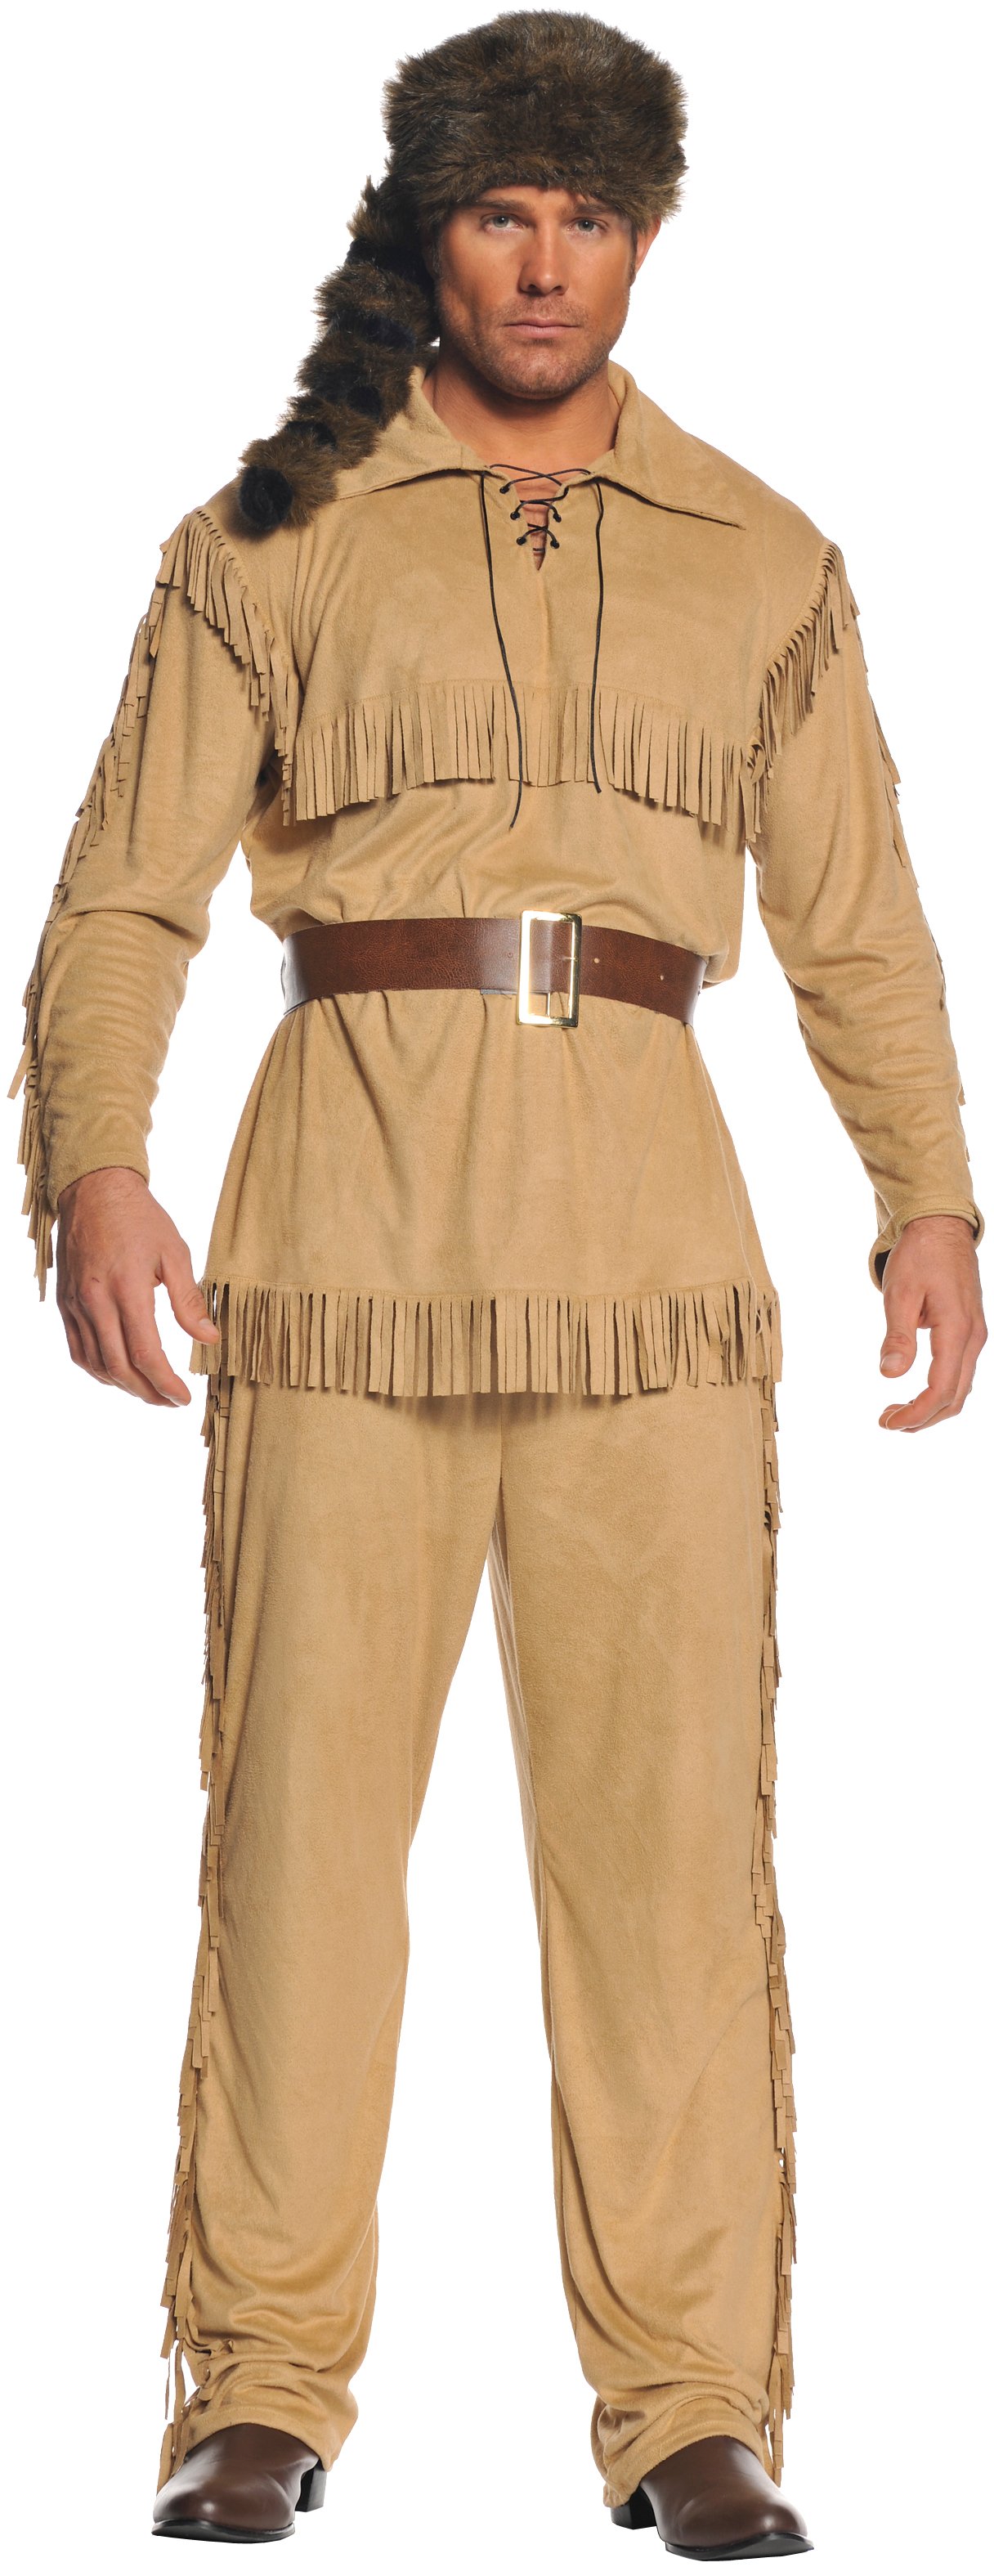 Frontier Man Plus Adult Costume